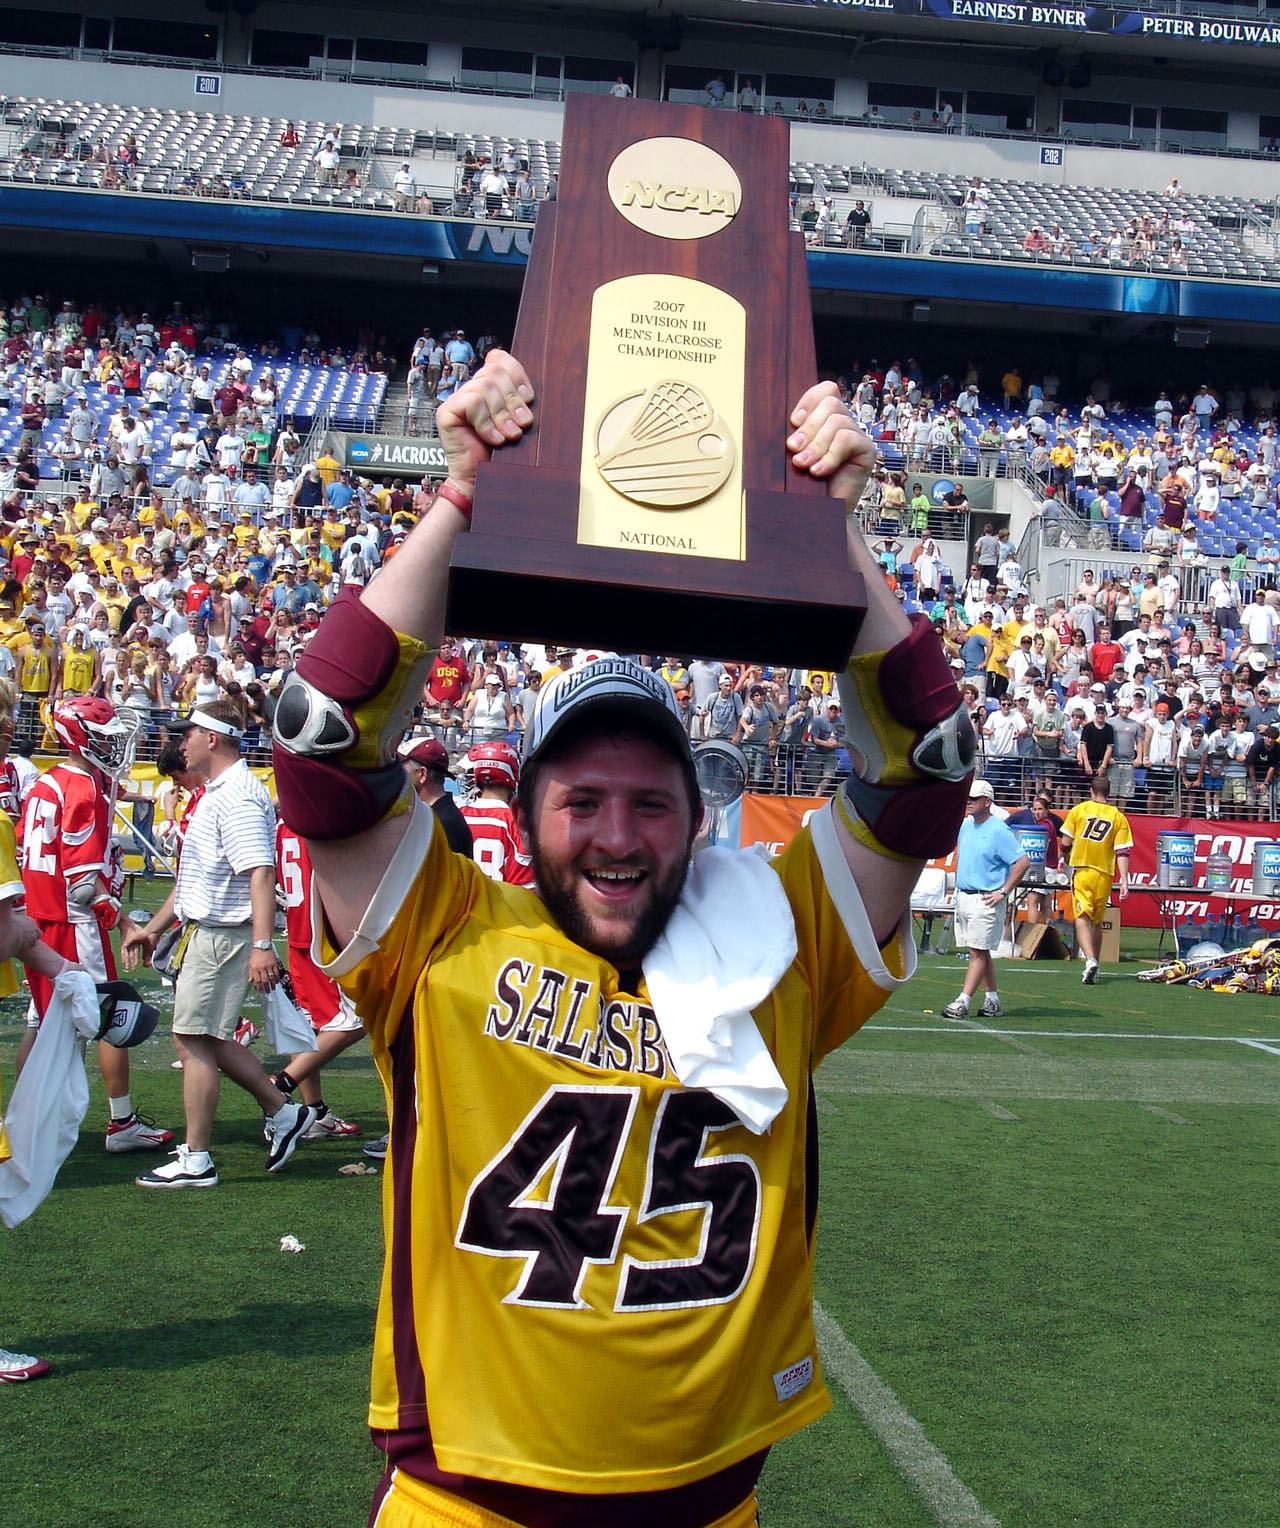 Salisbury Claims 2007 NCAA Men's Lacrosse National Championship